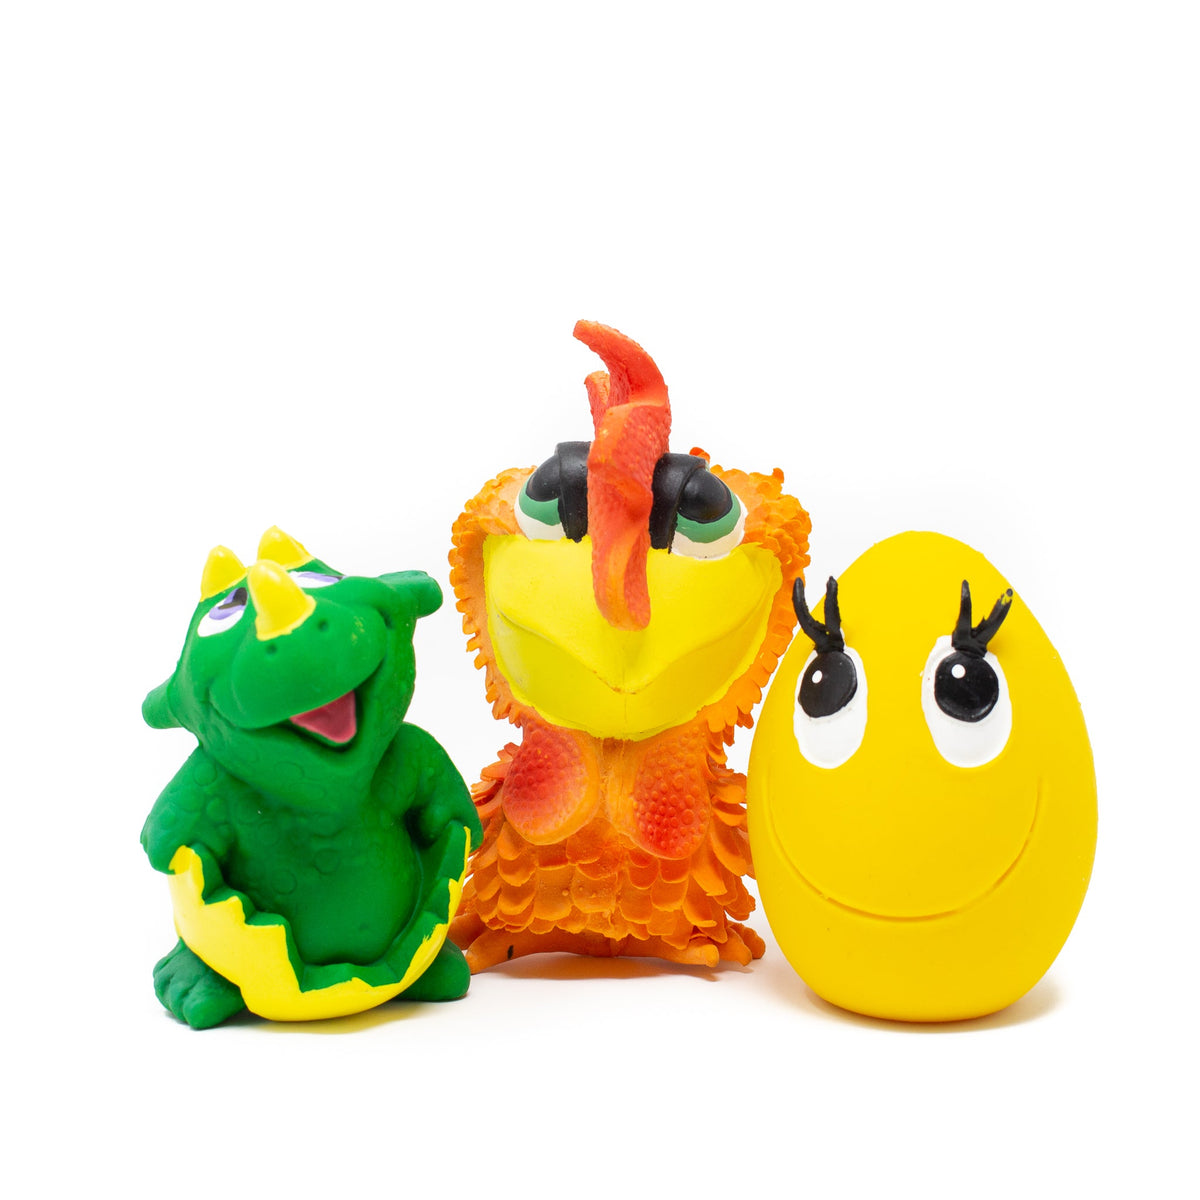 XL Egg, Cockerel and Dino in Egg 3-Pet Set - Natural Rubber Toys